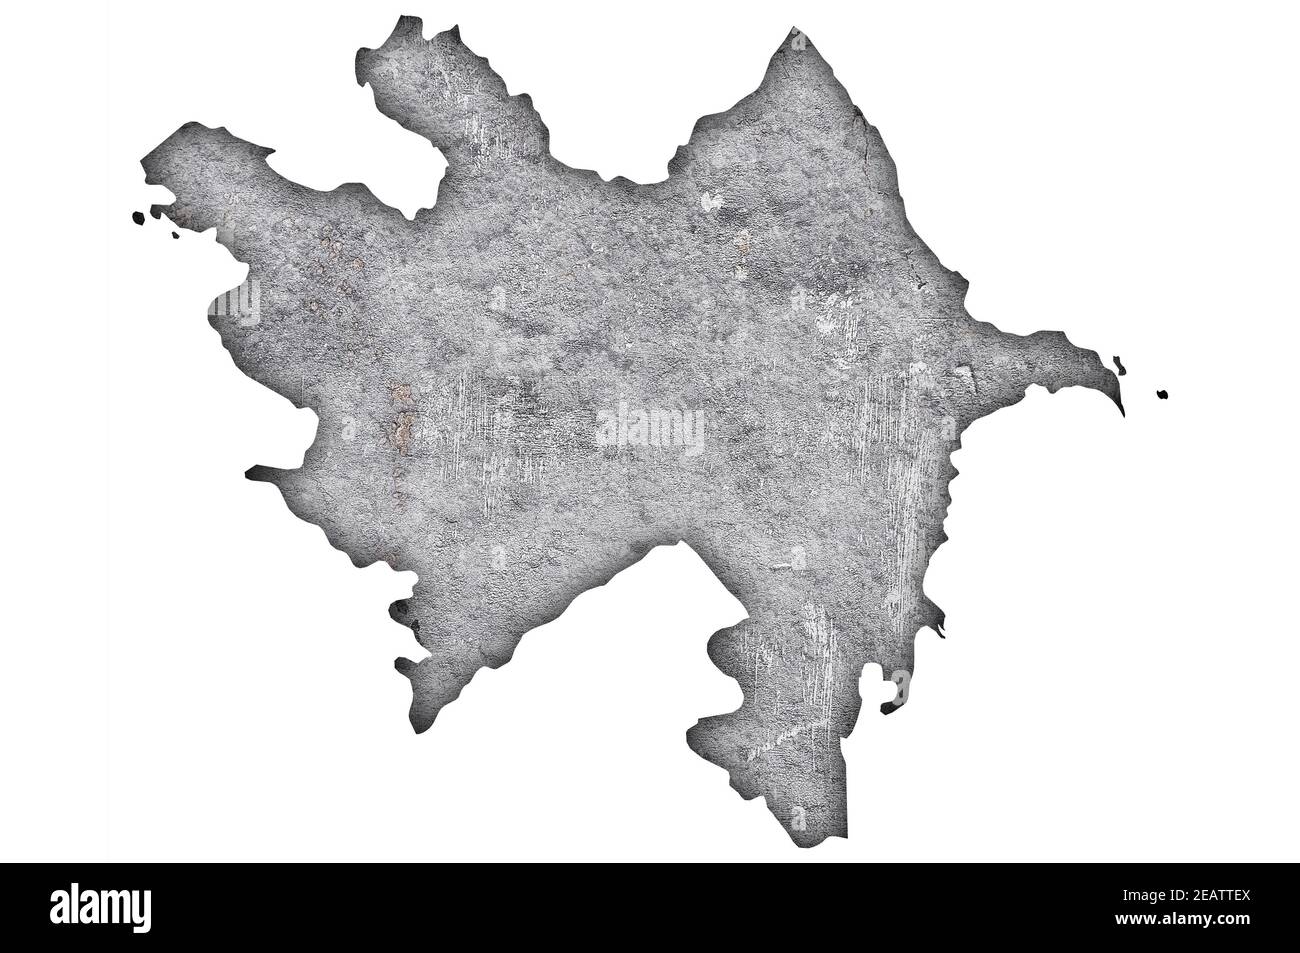 Map of Azerbaijan on weathered concrete Stock Photo